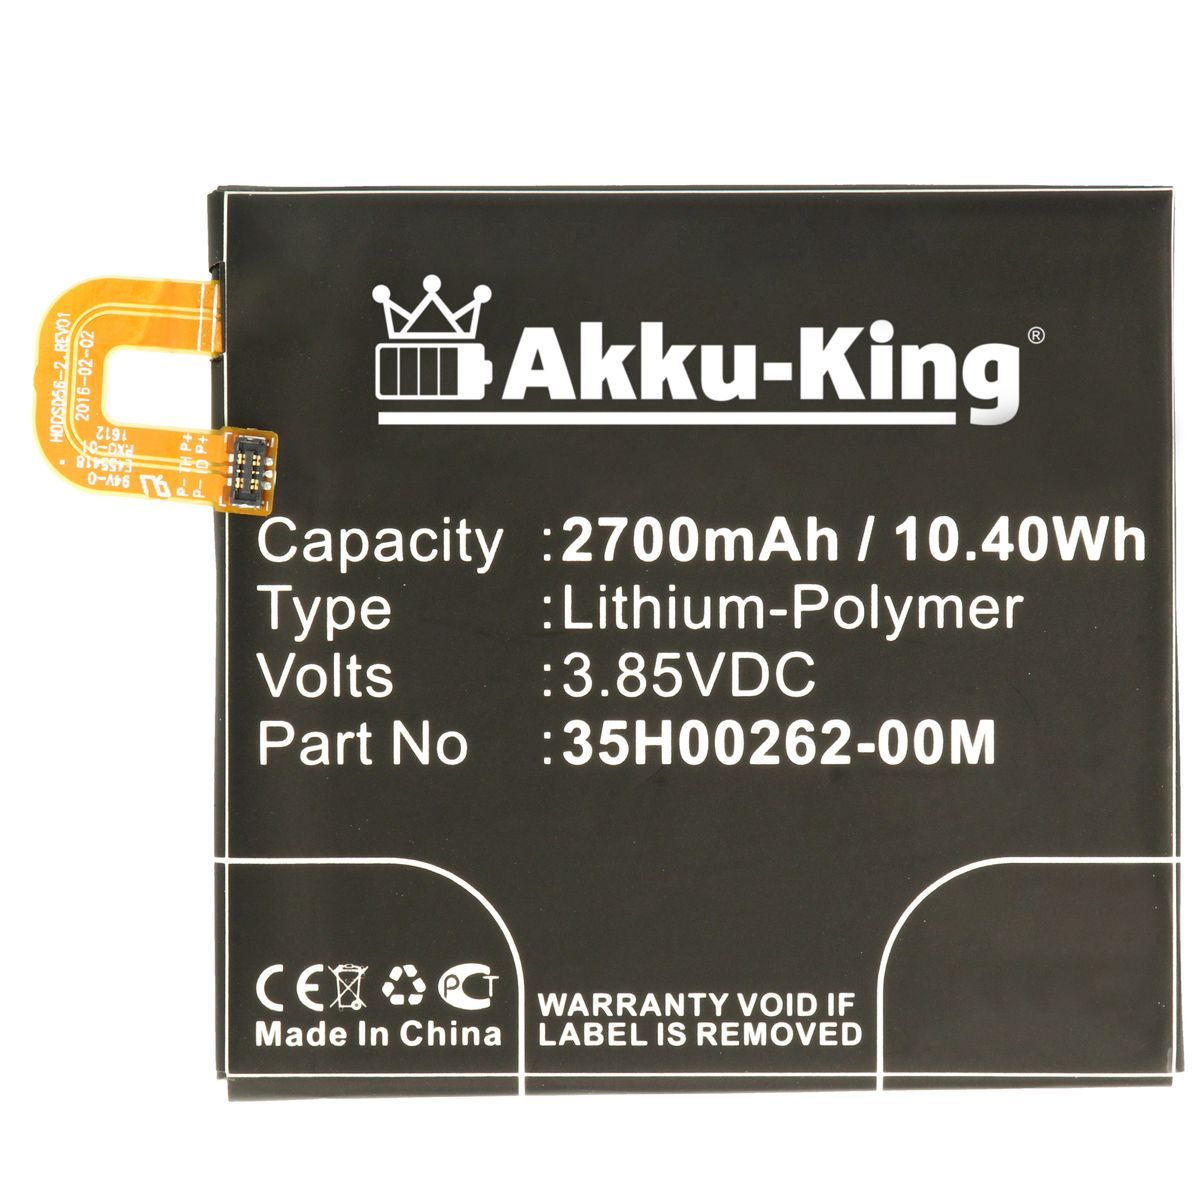 AKKU-KING Akku Volt, 35H00262-00M mit kompatibel Google 3.8 Li-Polymer Handy-Akku, 2700mAh